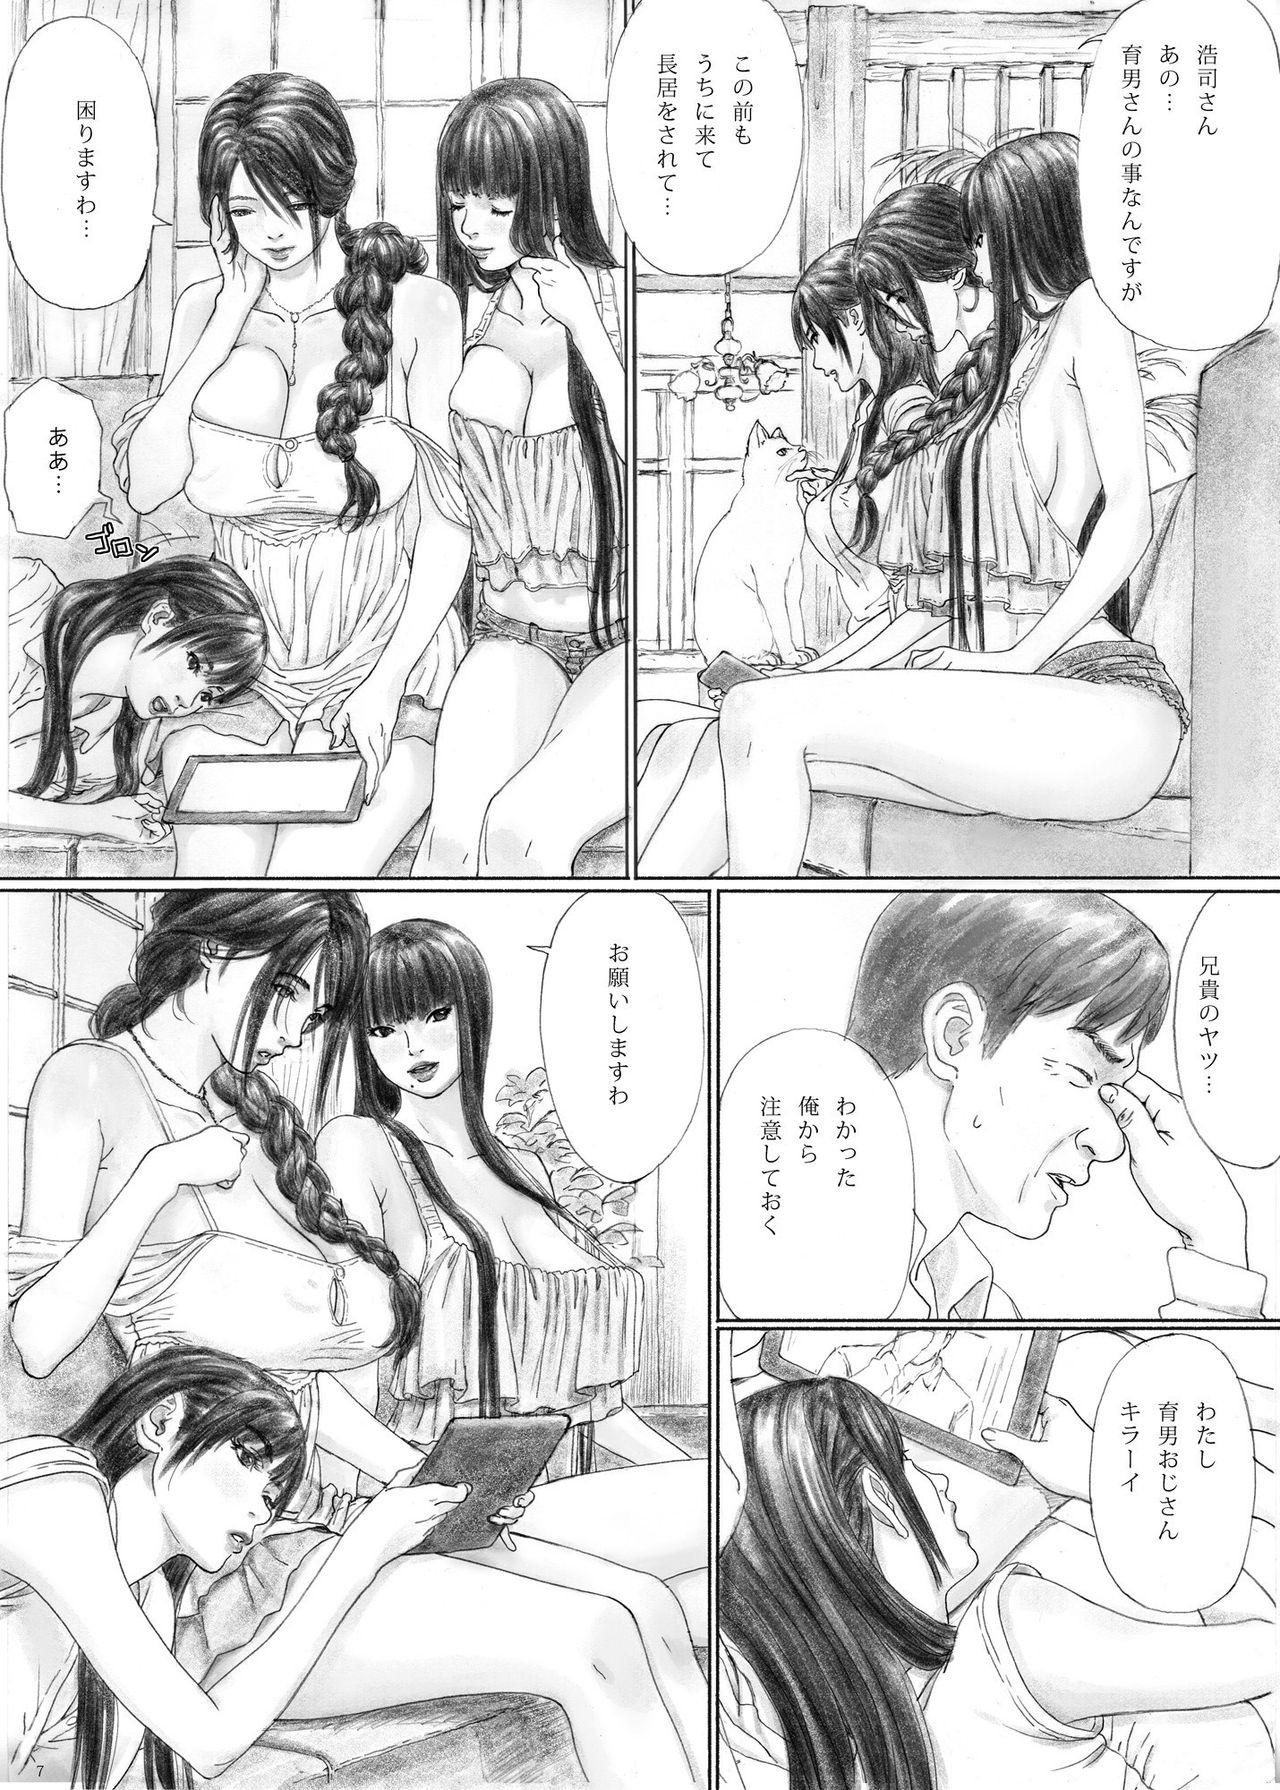 Tinder Inyoku no Sumika 1 - Original Strip - Page 6